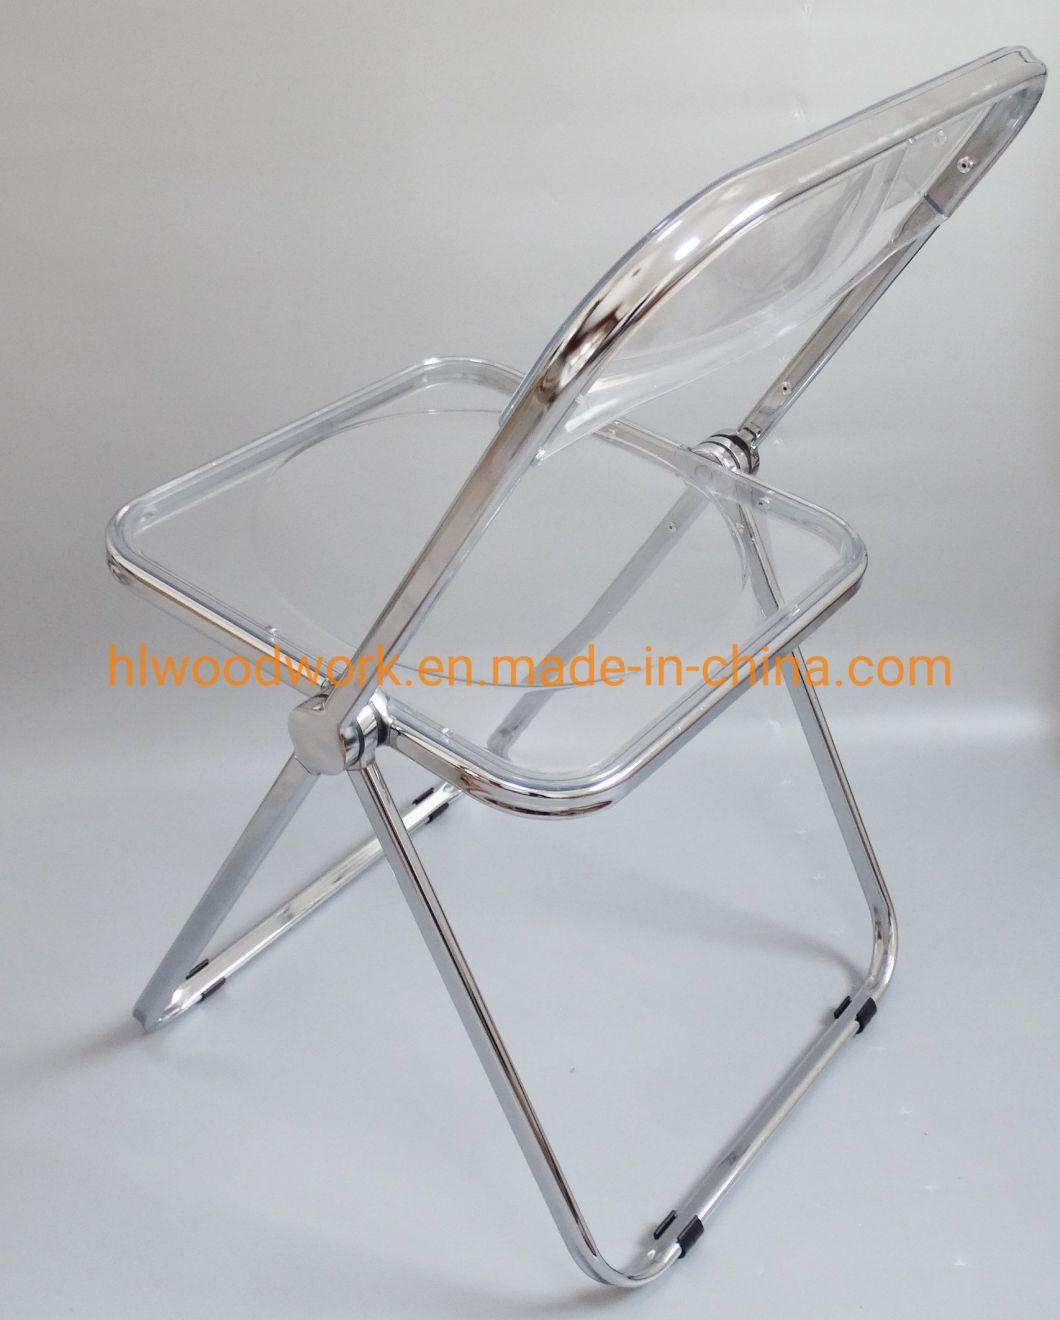 Modern Transparent Blue Folding Chair PC Plastic Study Chair Chrome Frame Office Bar Dining Leisure Banquet Wedding Meeting Chair Plastic Dining Chair